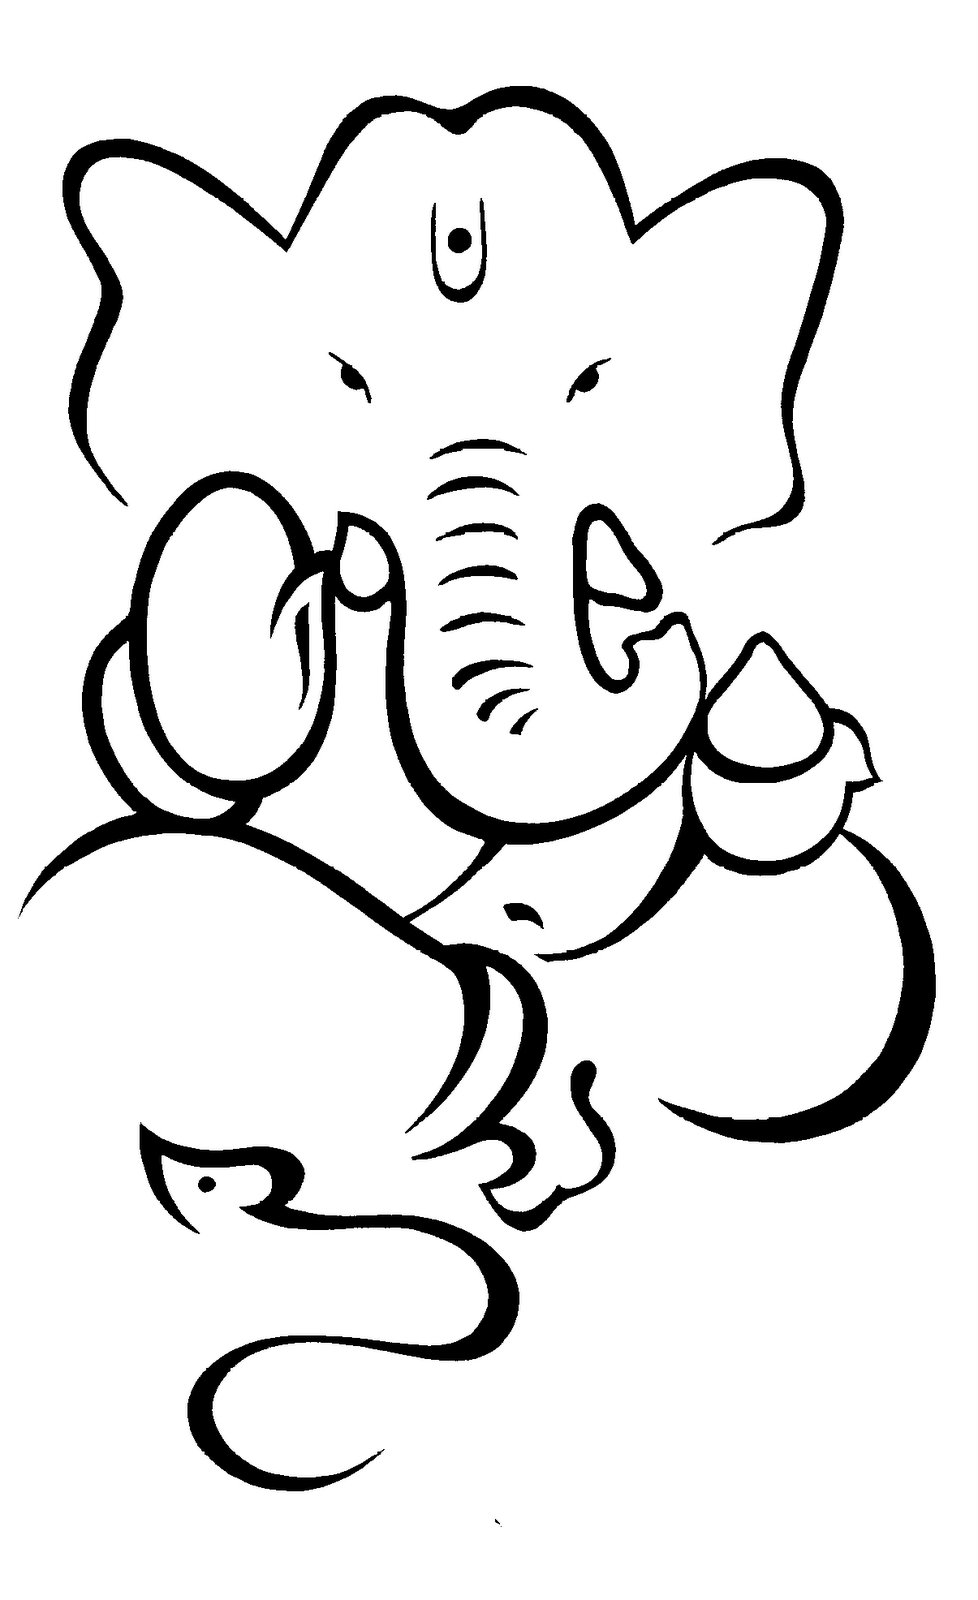 Free Ganesha Cliparts, Download Free Clip Art, Free Clip Art